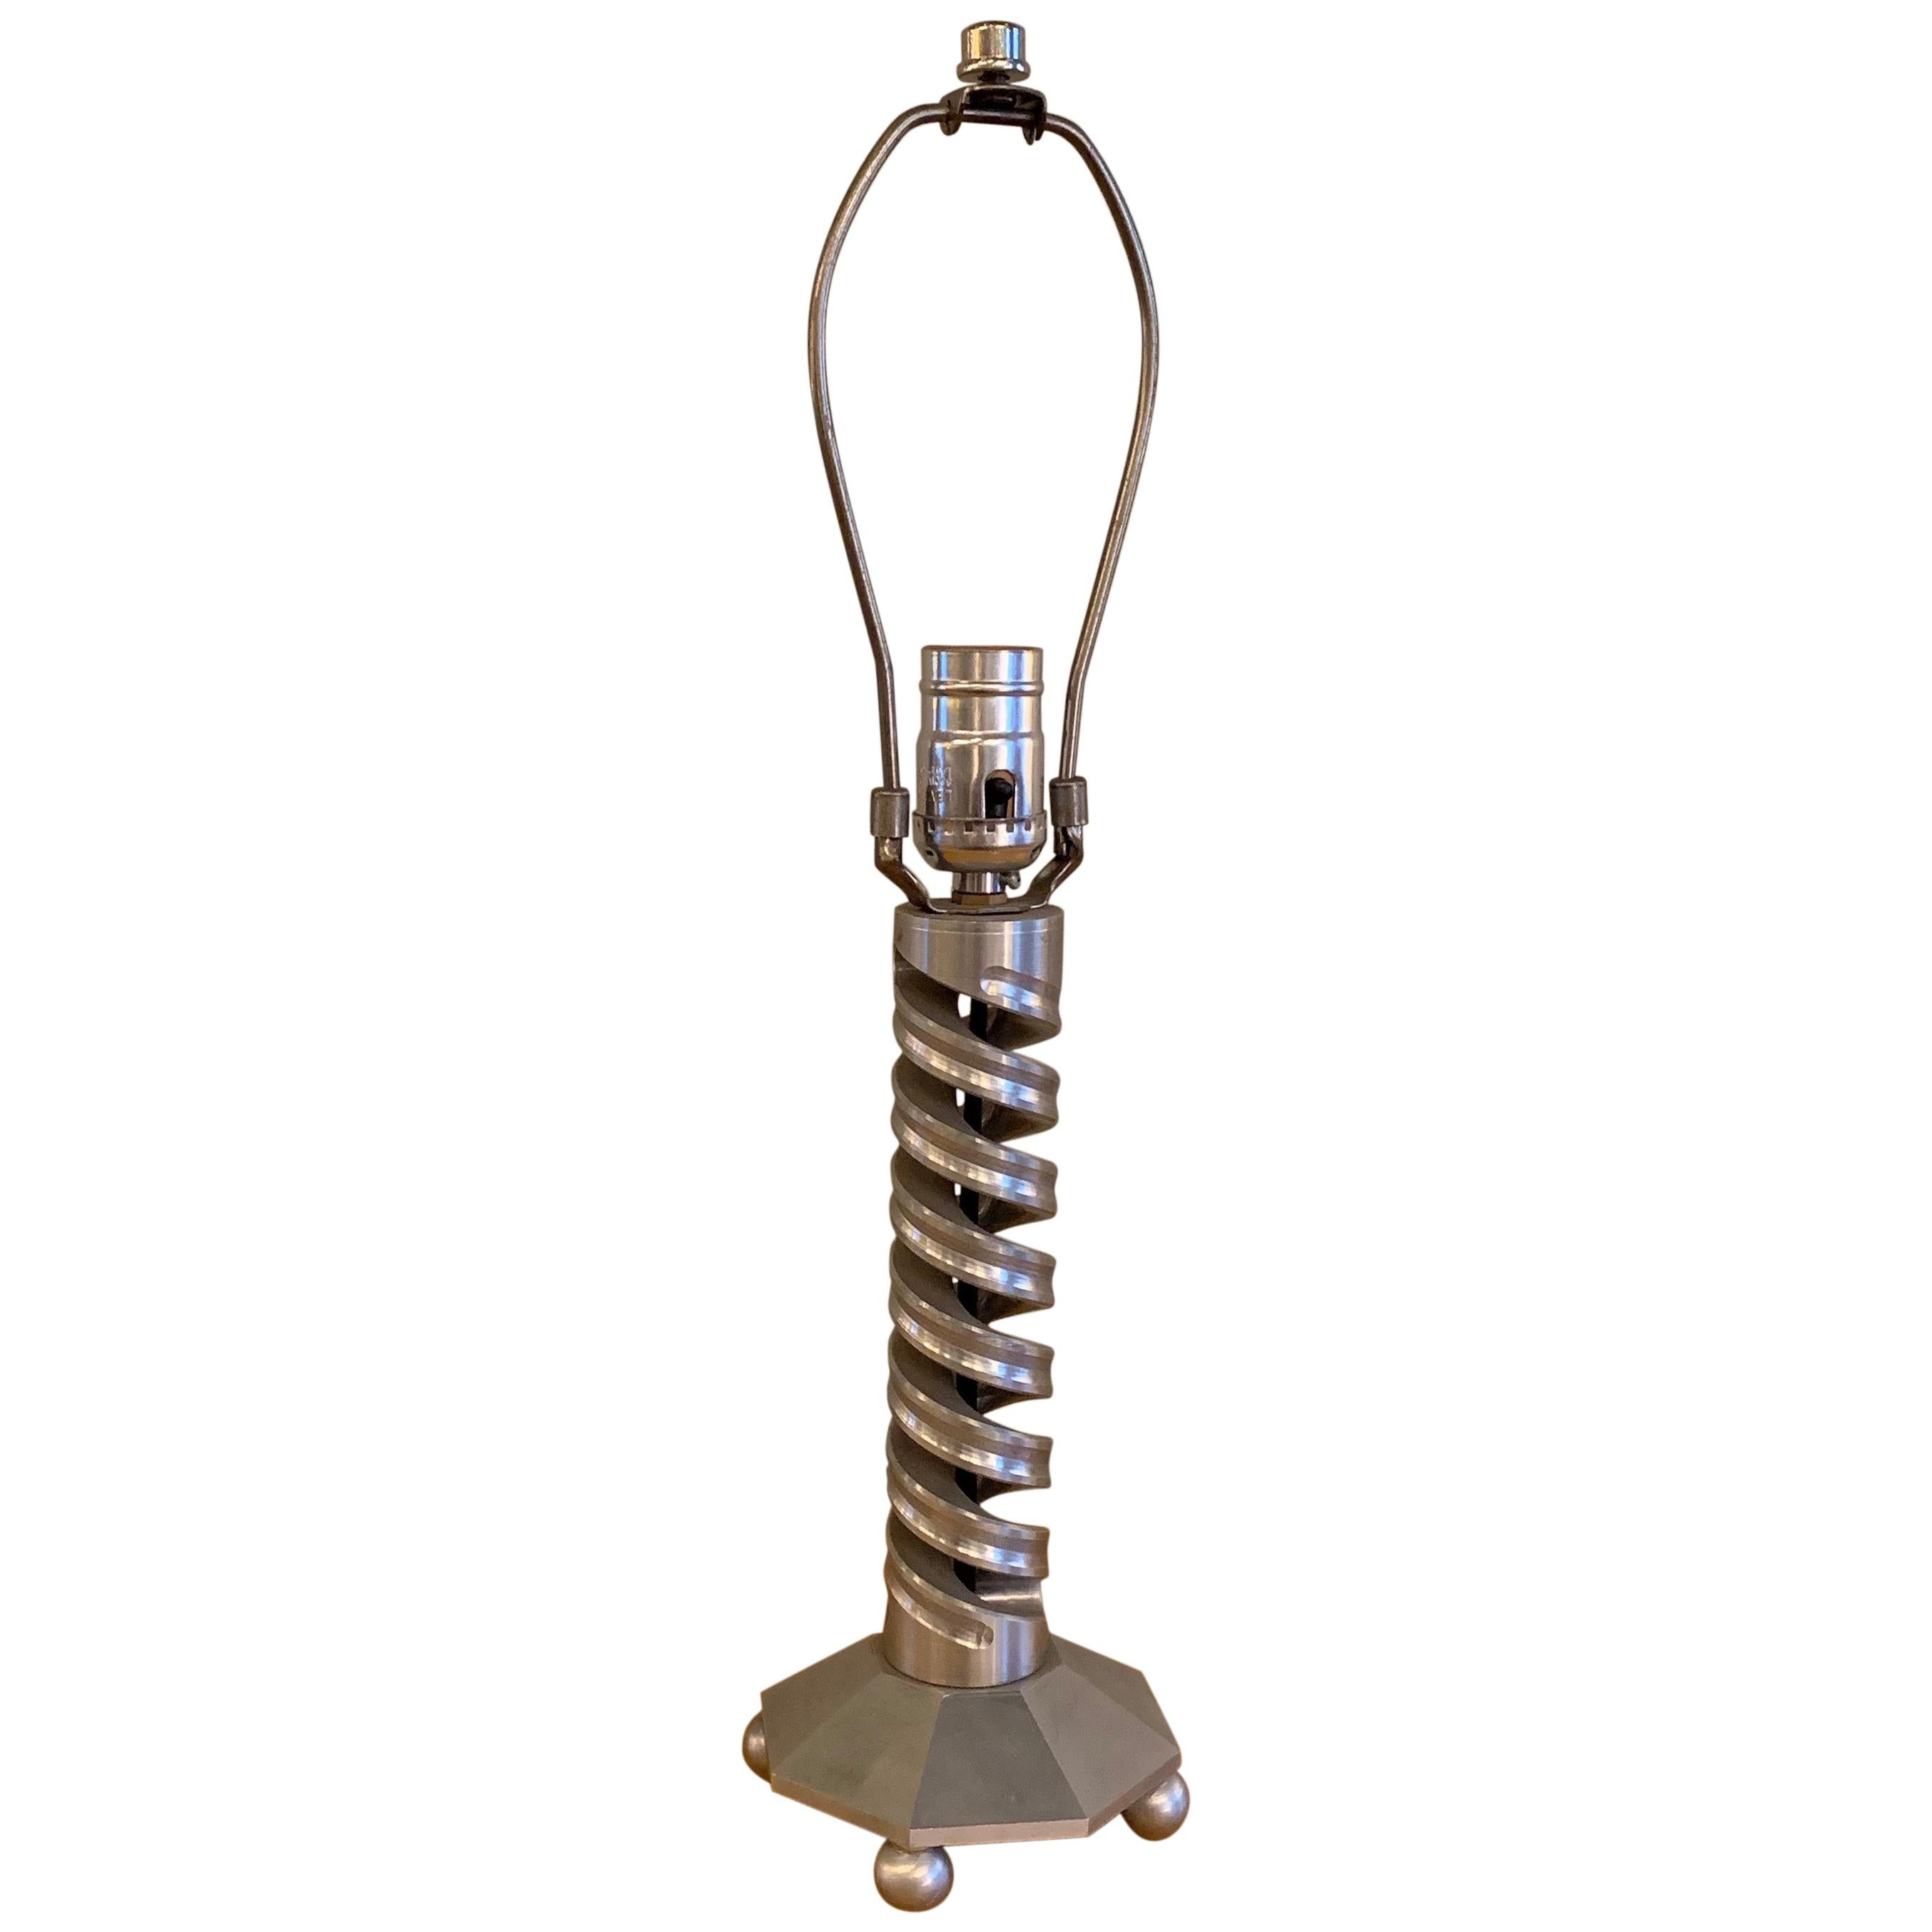 Machine Age Spiral Aluminum Table Lamp